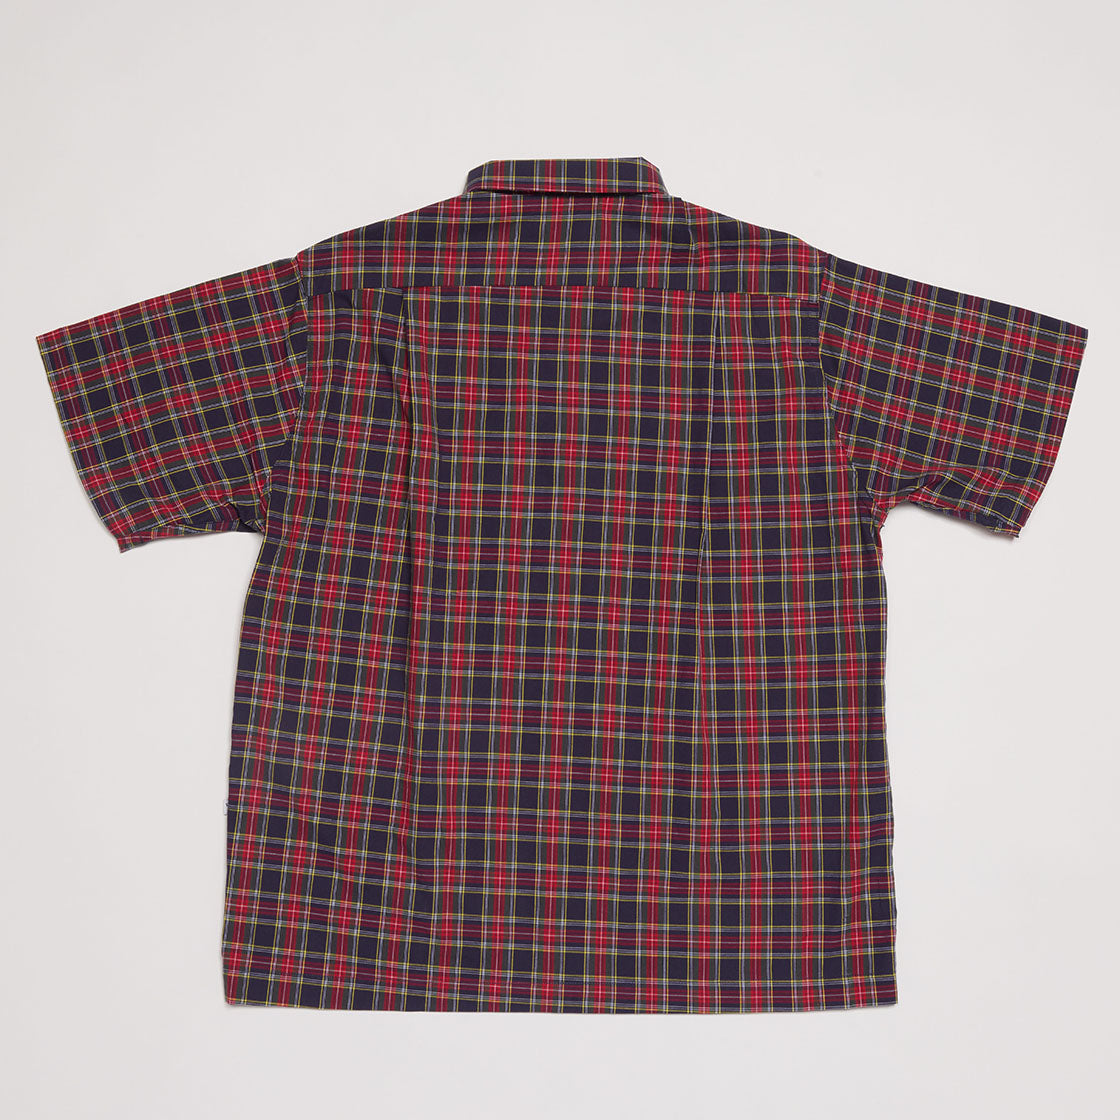 Round Collar Shirt (Navy x Red)